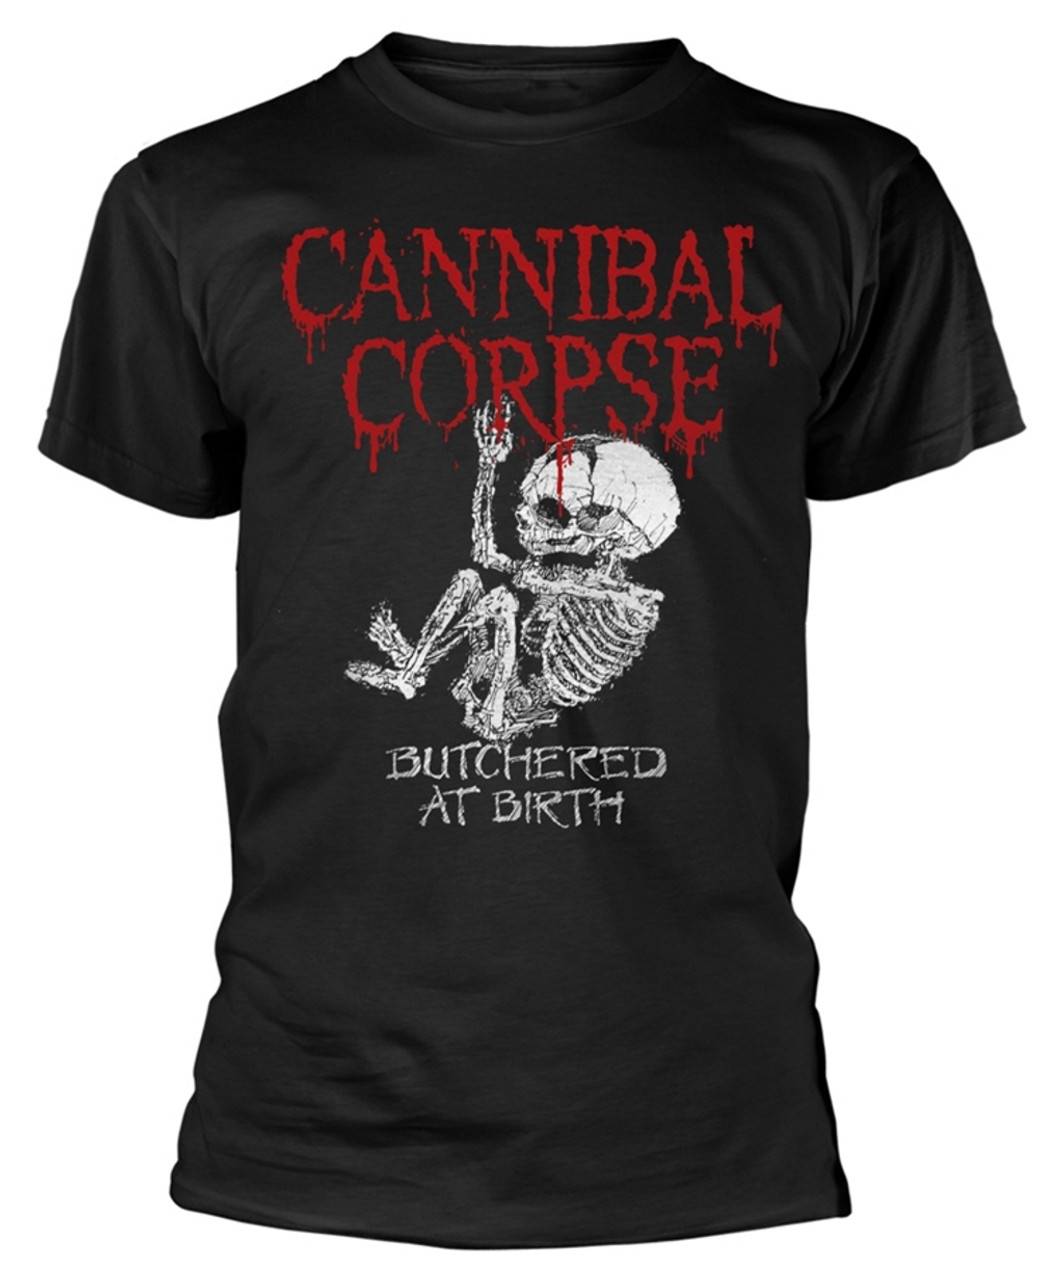 Cannibal Corpse 'Butchered At Birth Baby' T-Shirt